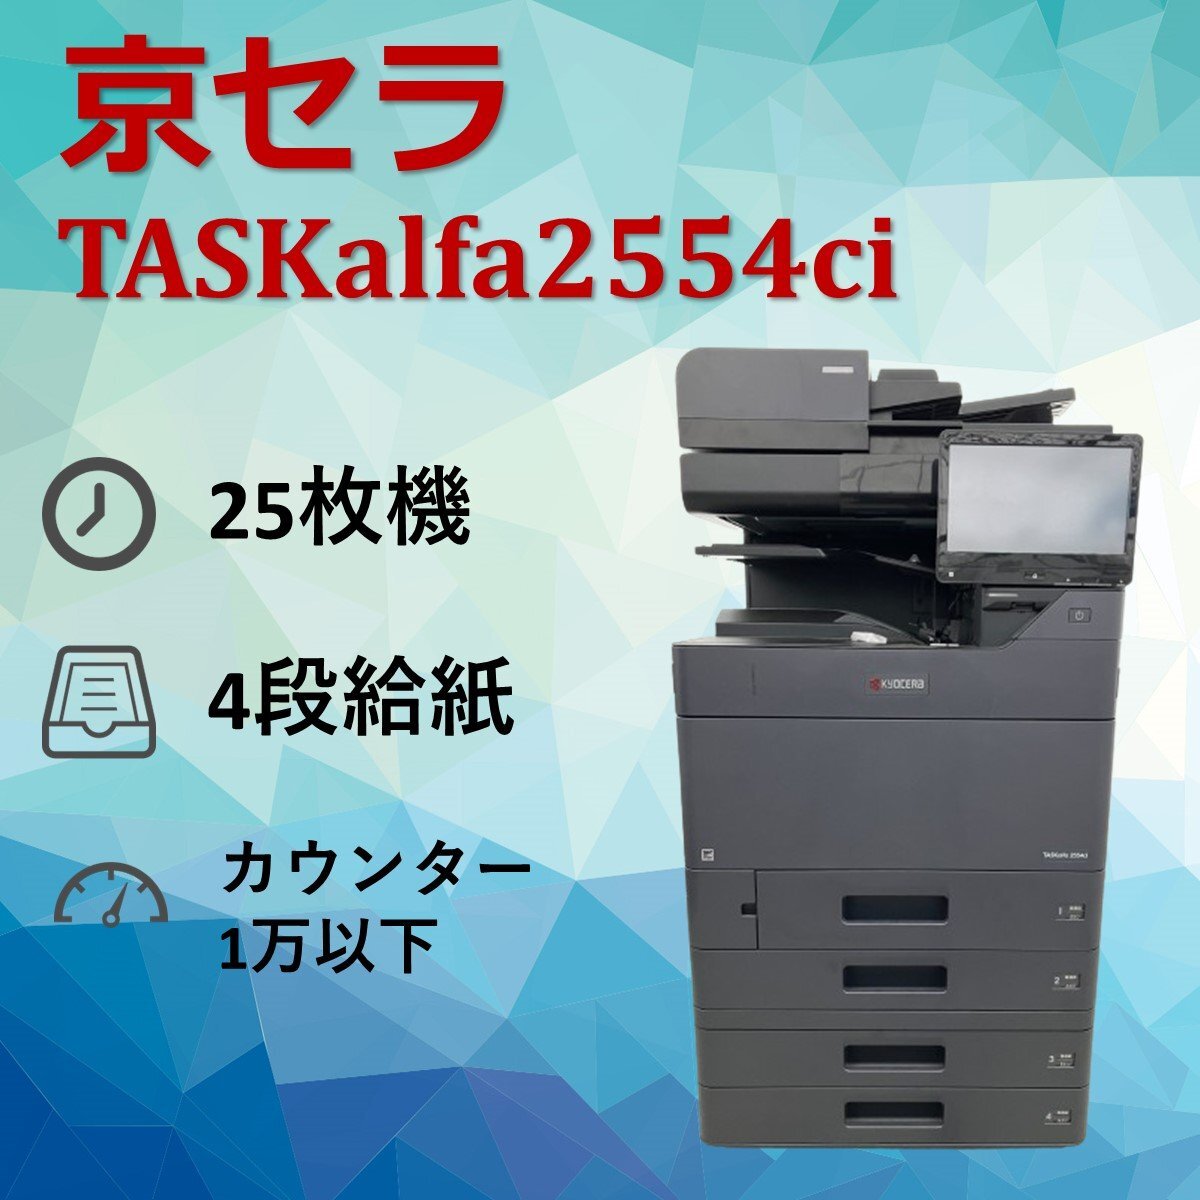 【0110KY01】京セラ KYOCERA 複合機 TASKalfa2554ci 業務用 複合機 コピー FAX プリンター スキャナー カラー A3 スキャンの画像1